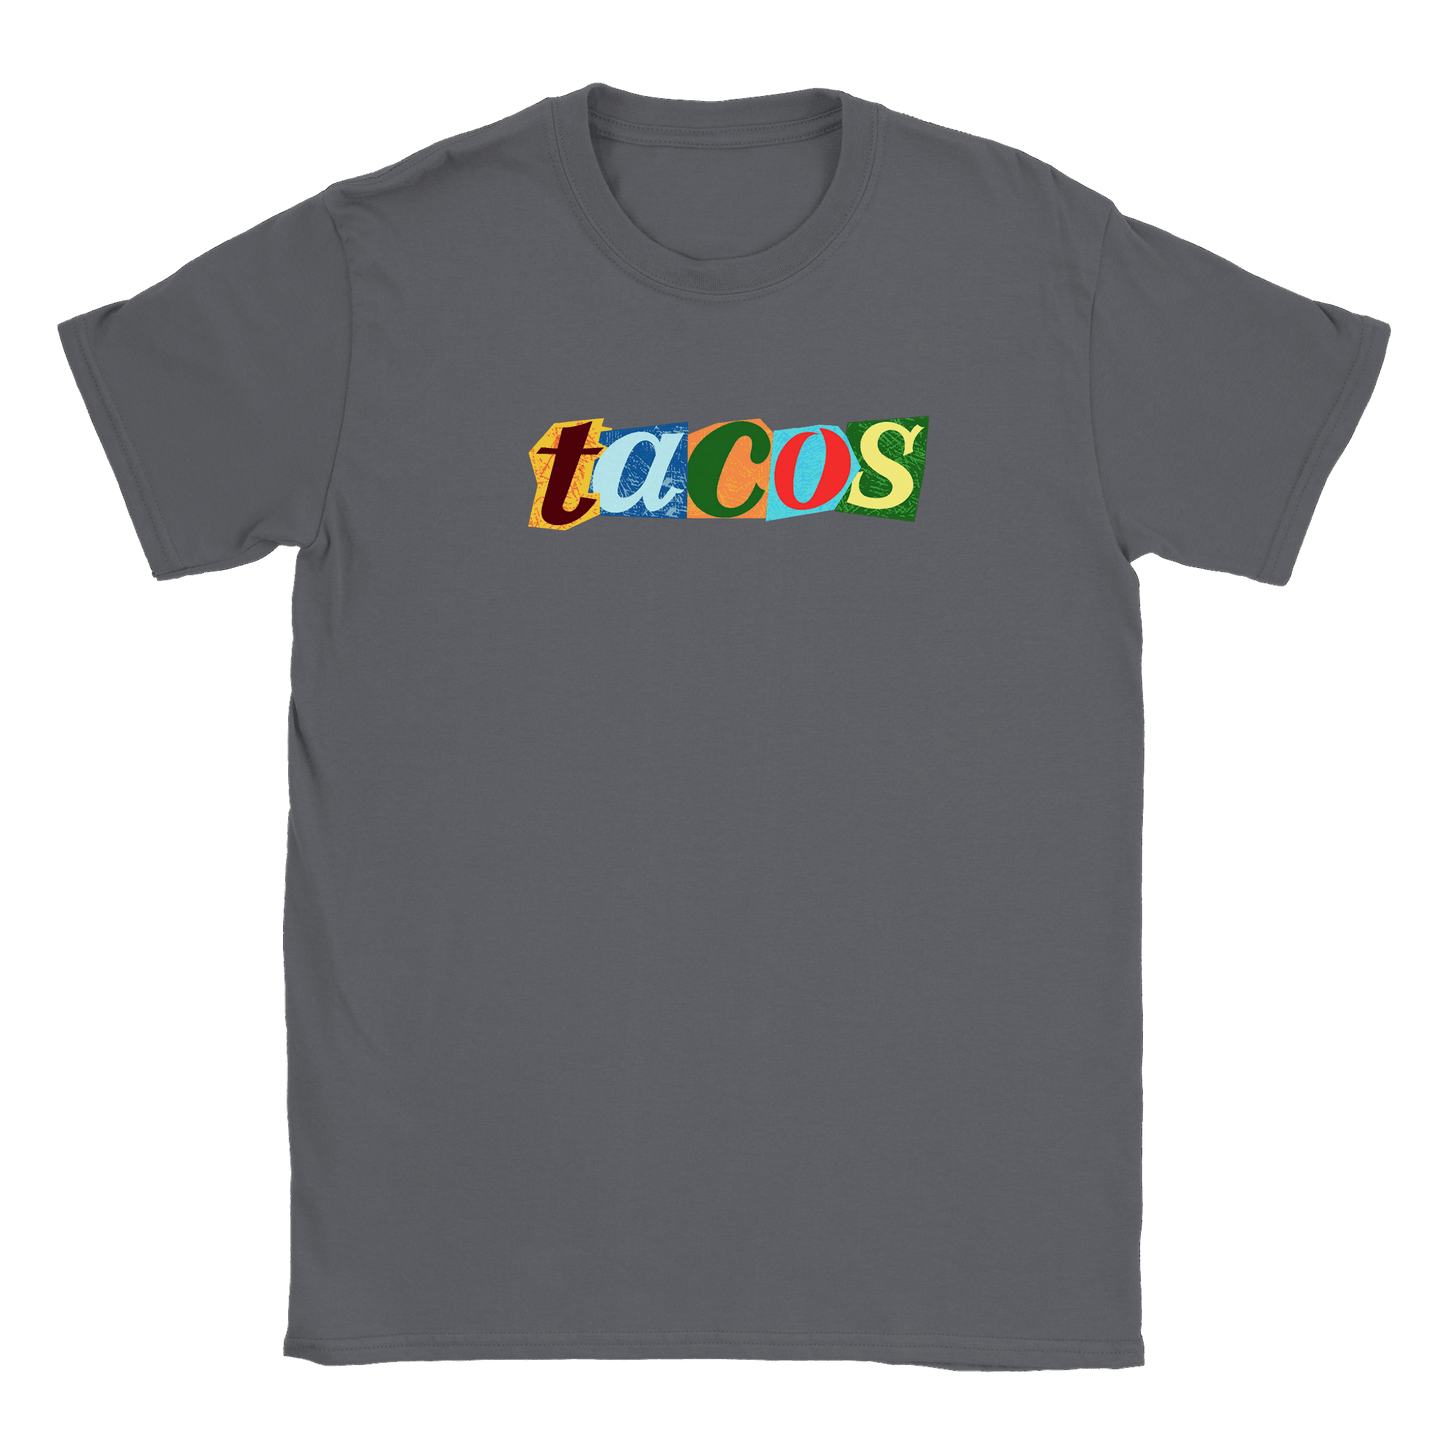 Tacos - T-shirt Charcoal